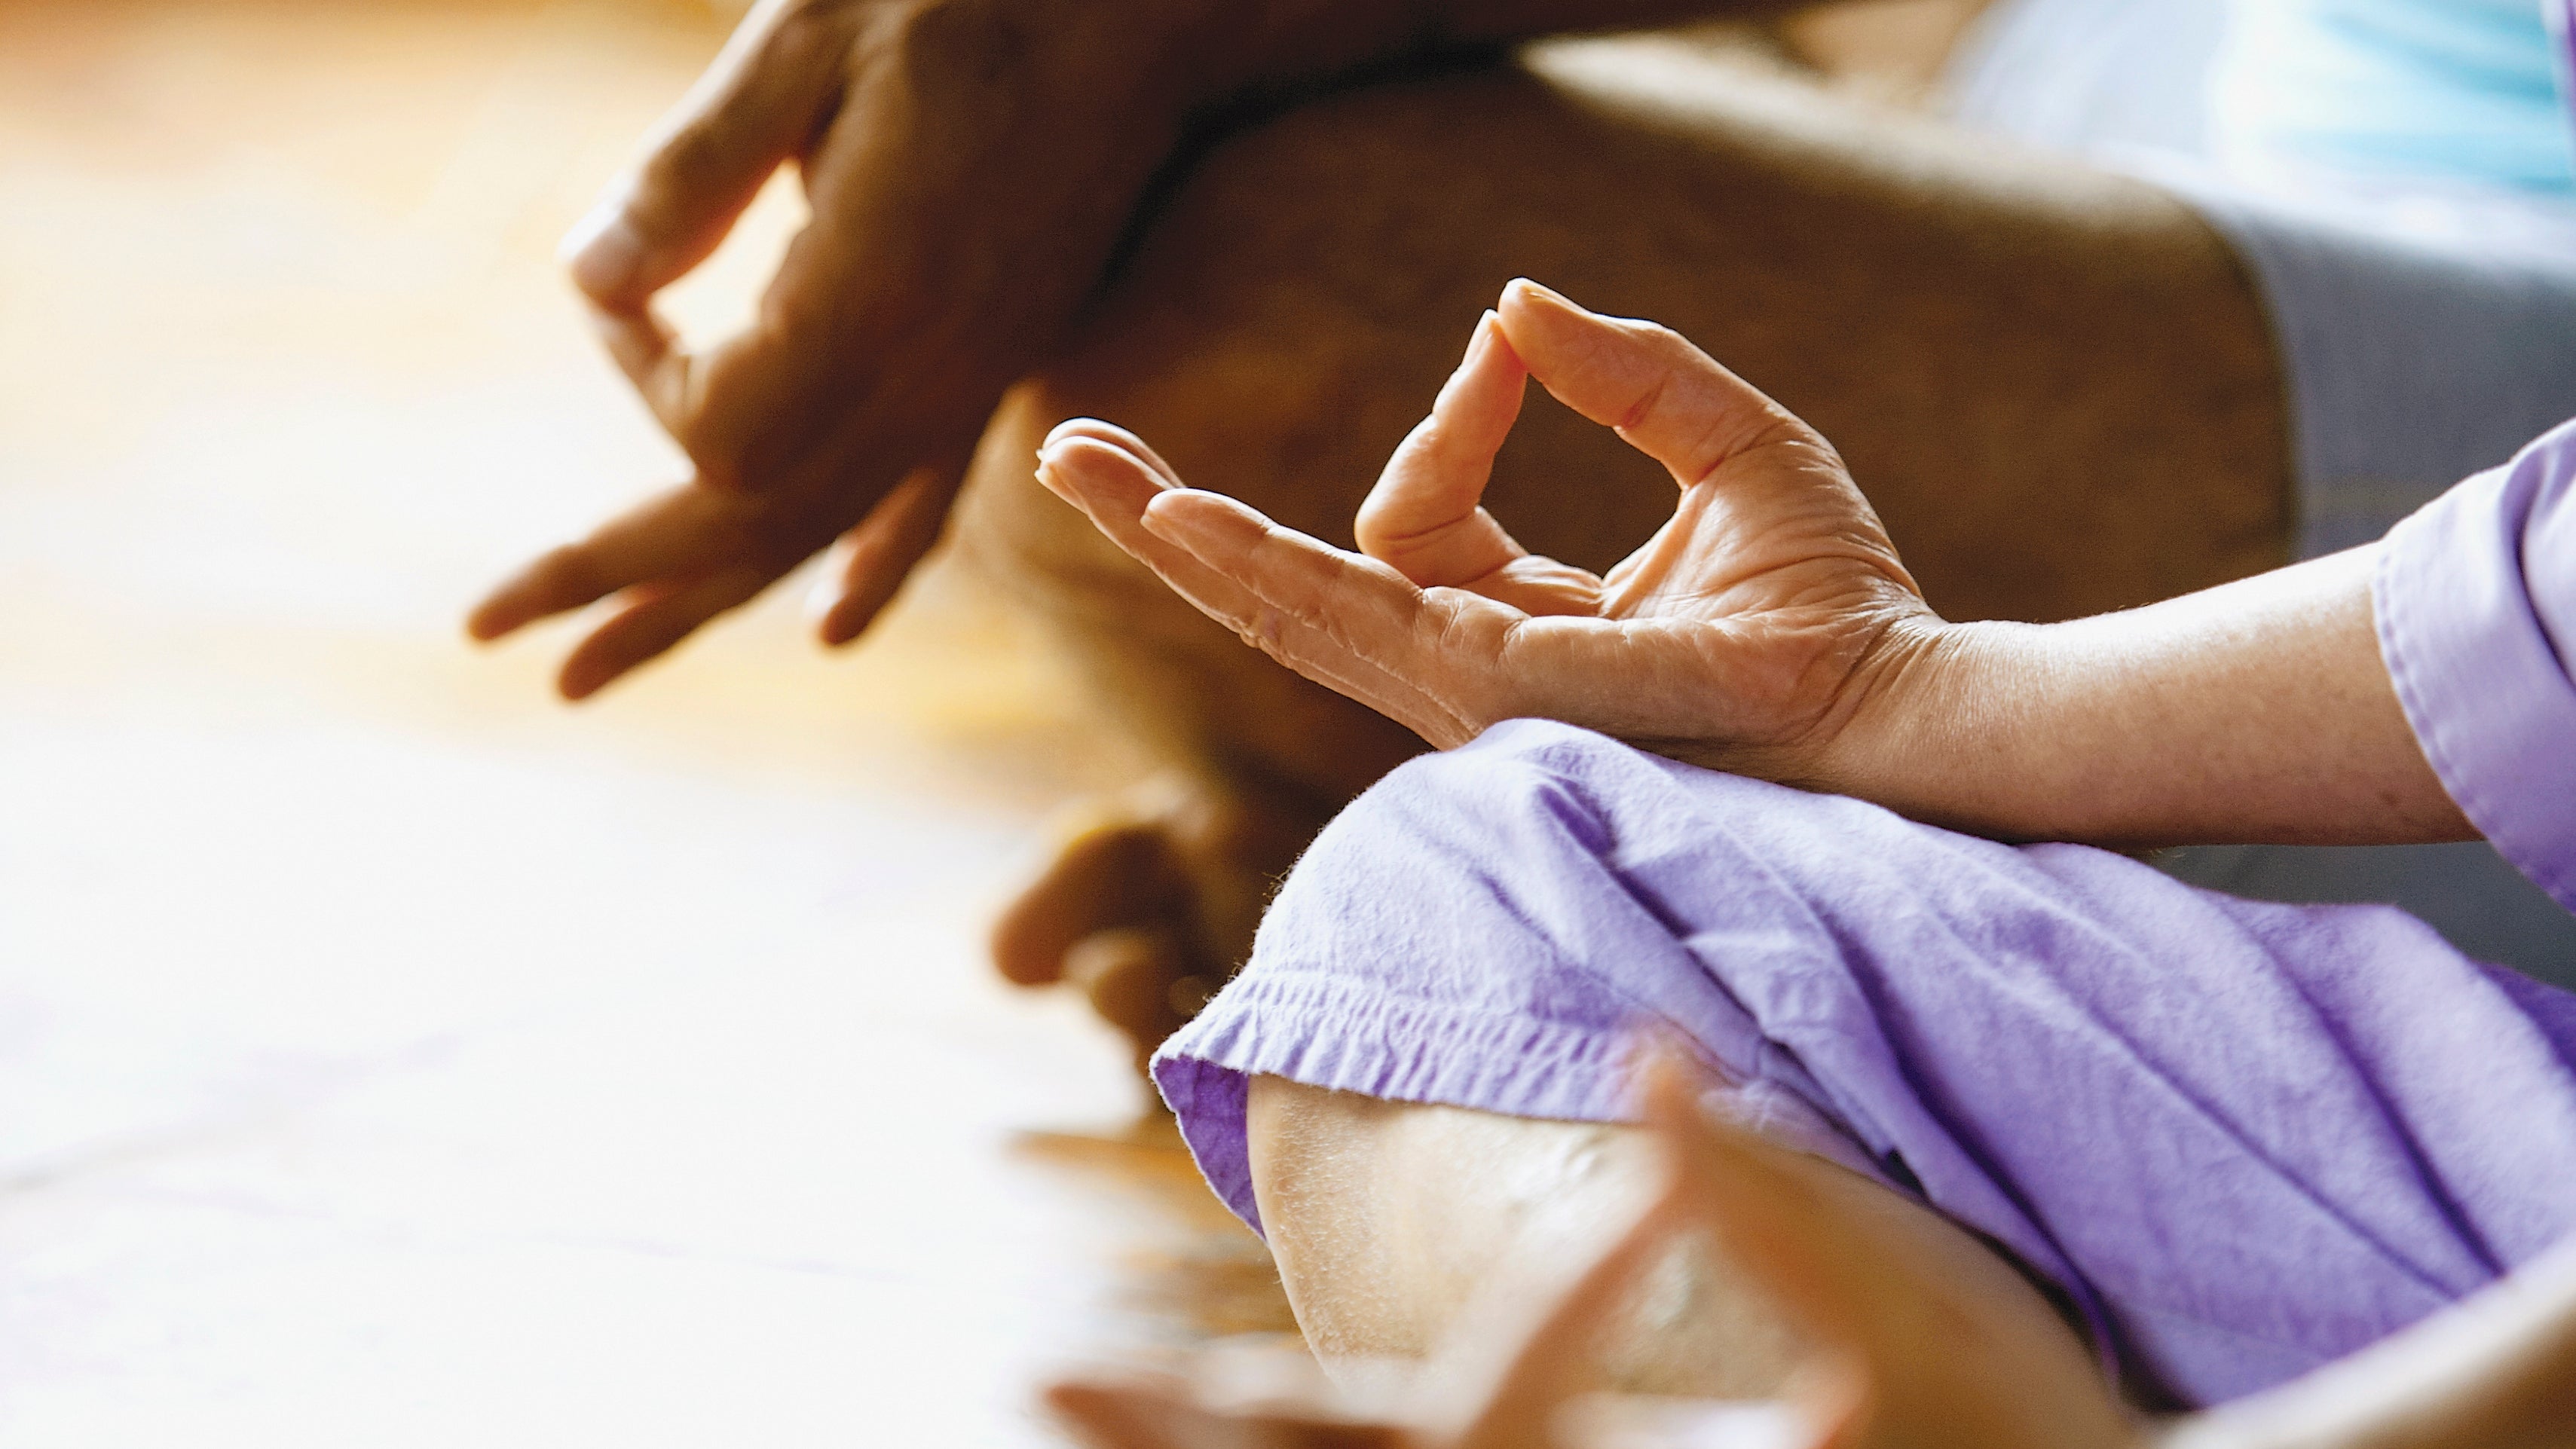 Yoga Hand Mudras to Sharpen Your Focus - Center For Yoga